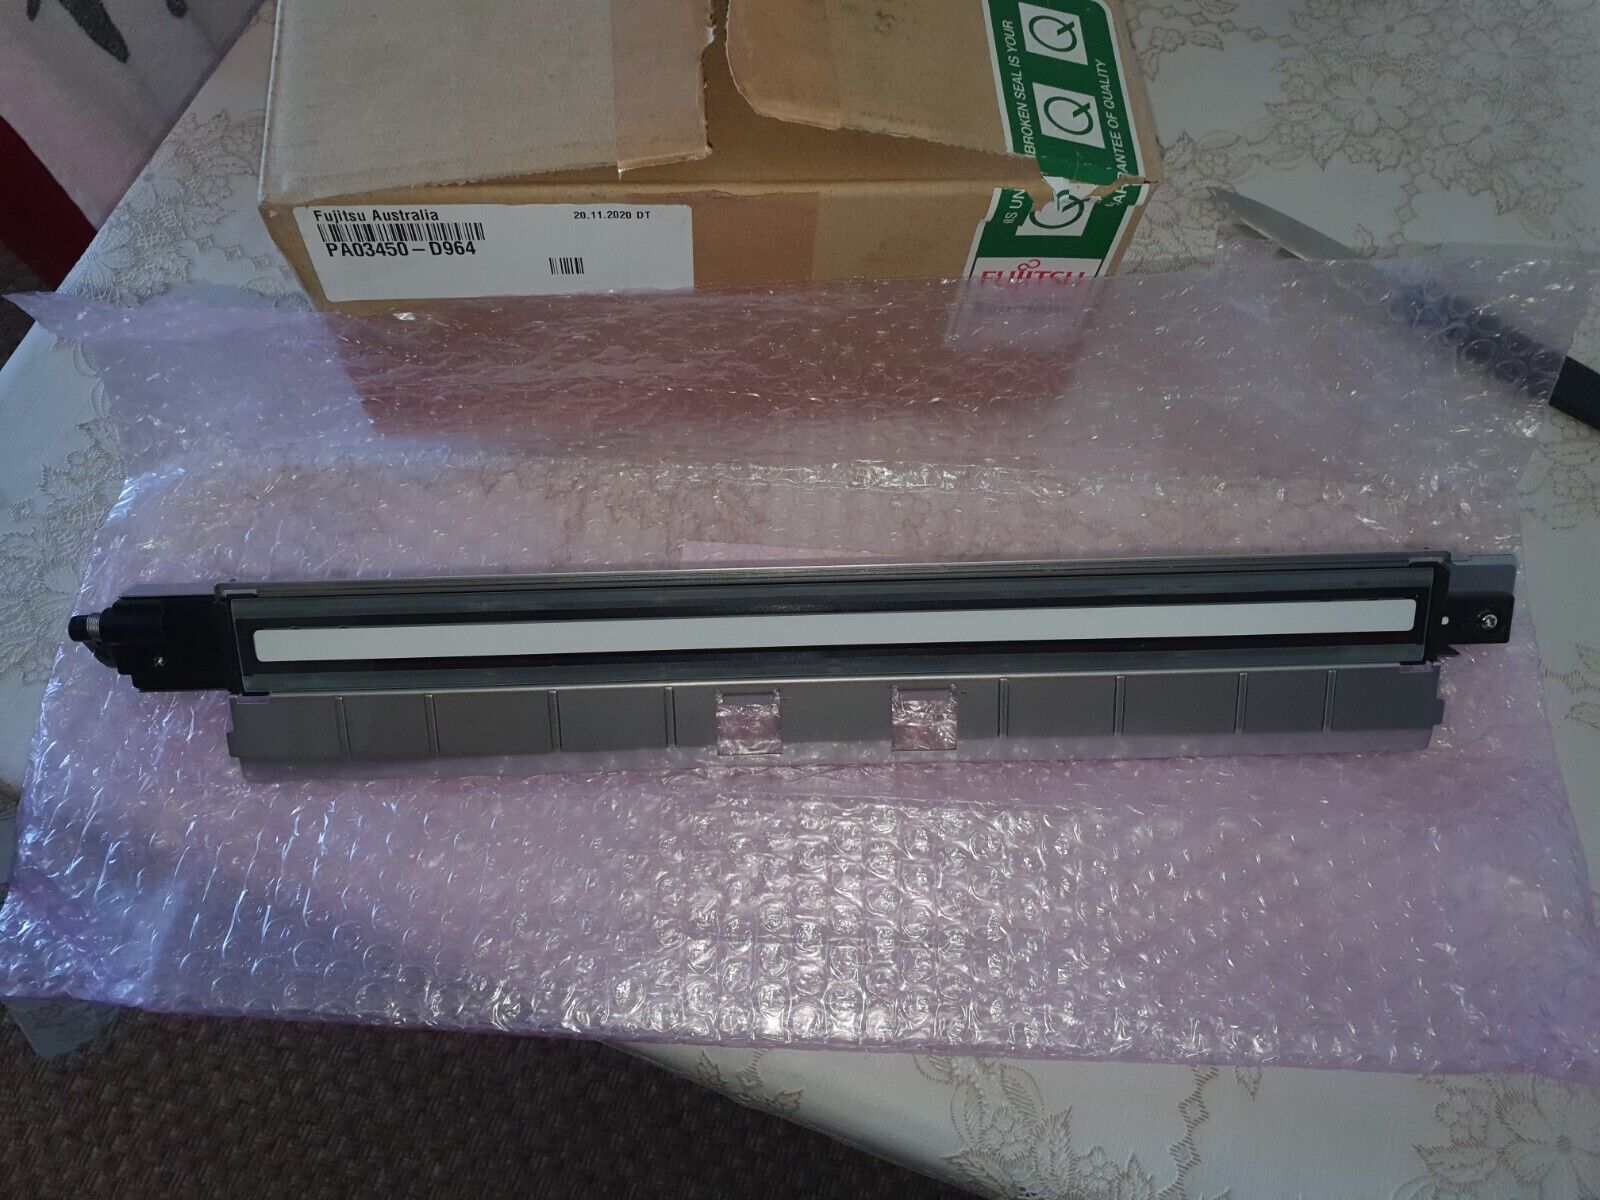 Genuine Fujitsu PA03450-D964 Scanner Upper Background Repair Part for FI-5900C